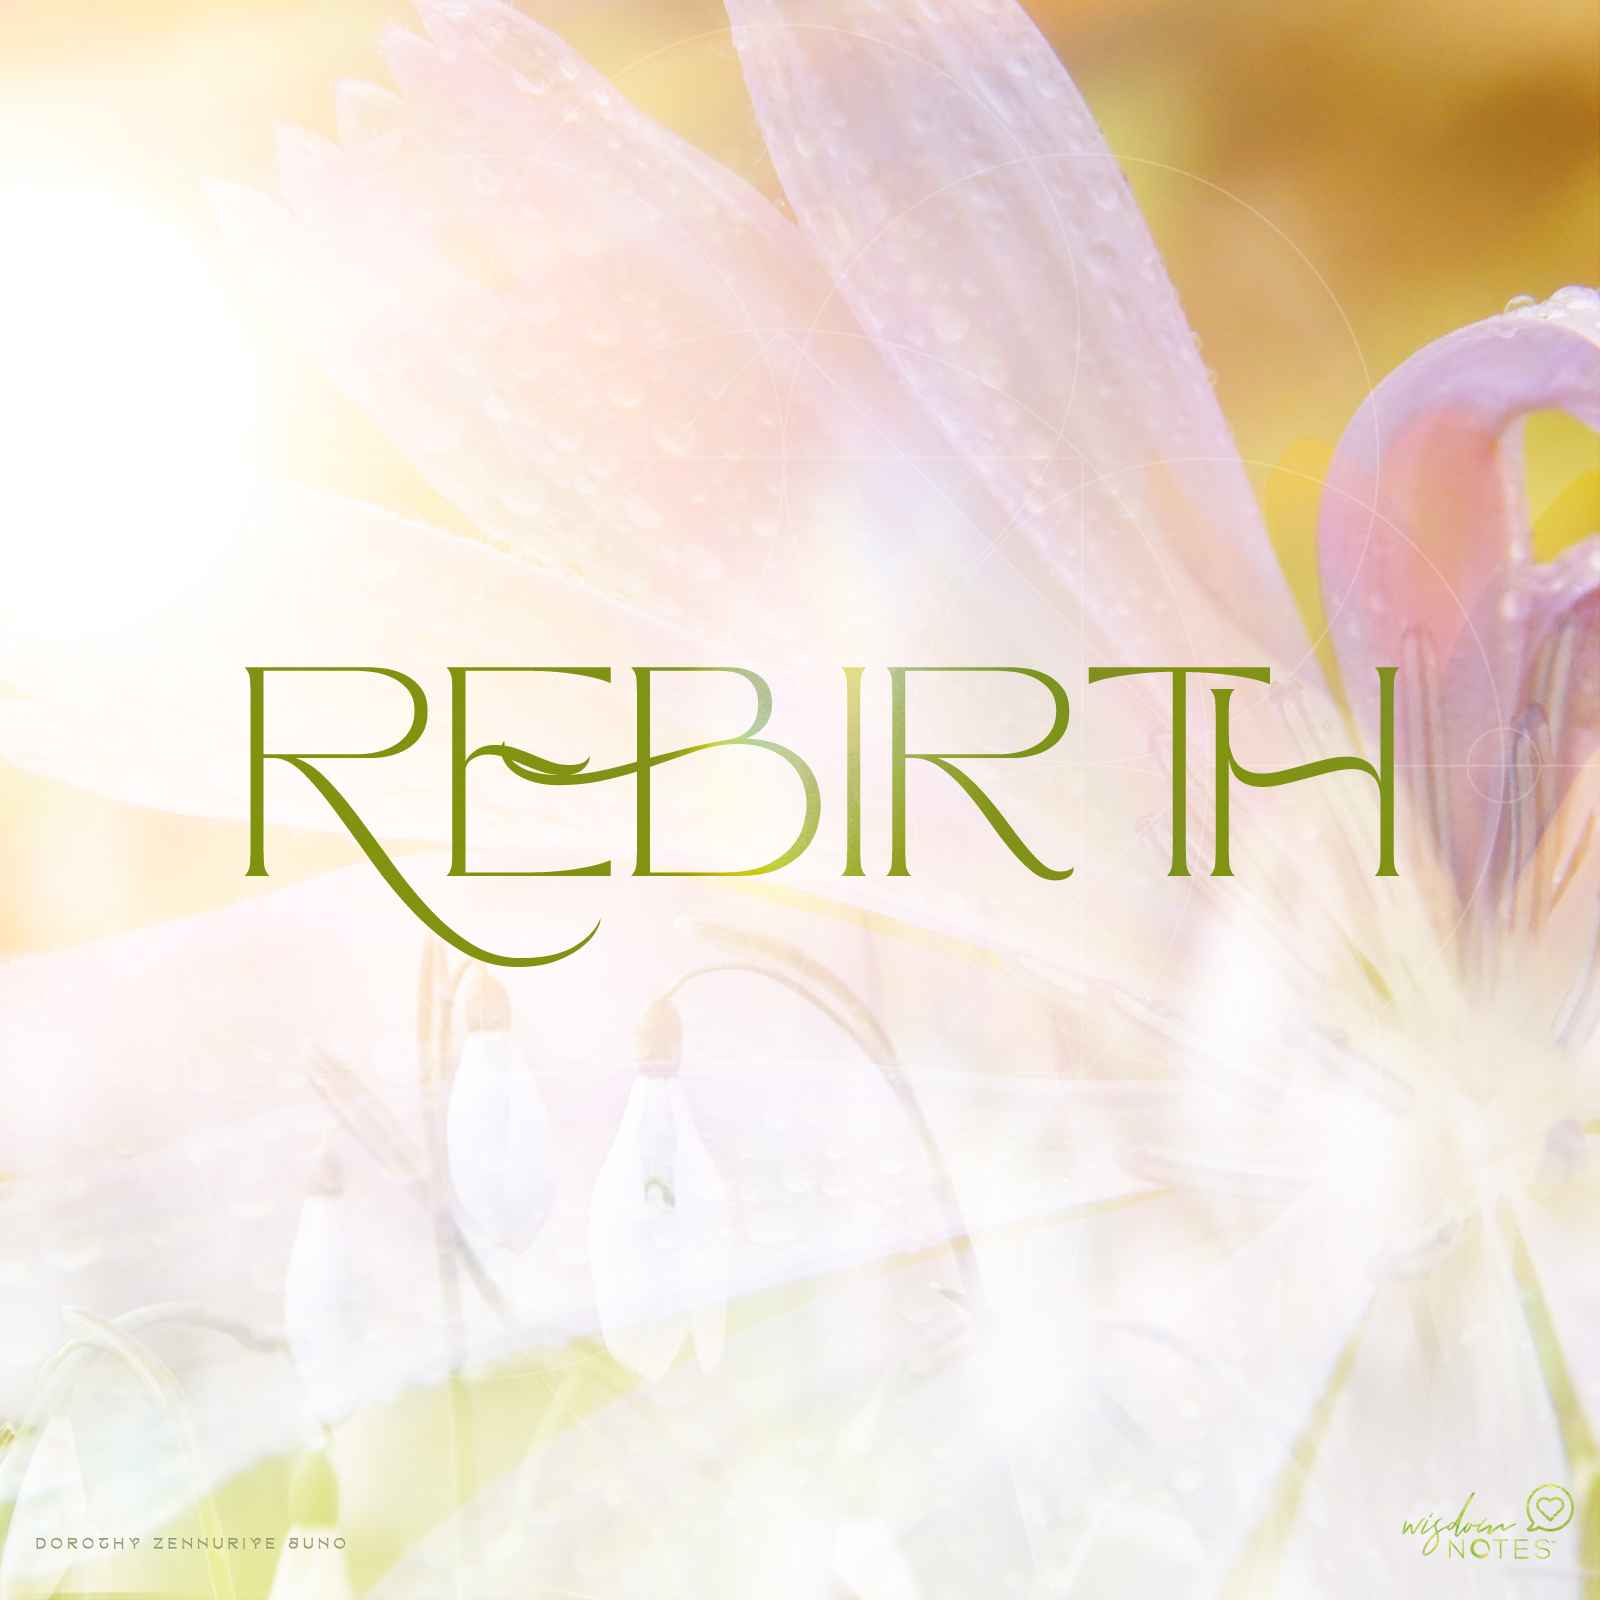 rebirth - A Wisdom Note - 04.23.23 with dorothy zennuriye juno (image of flowers)